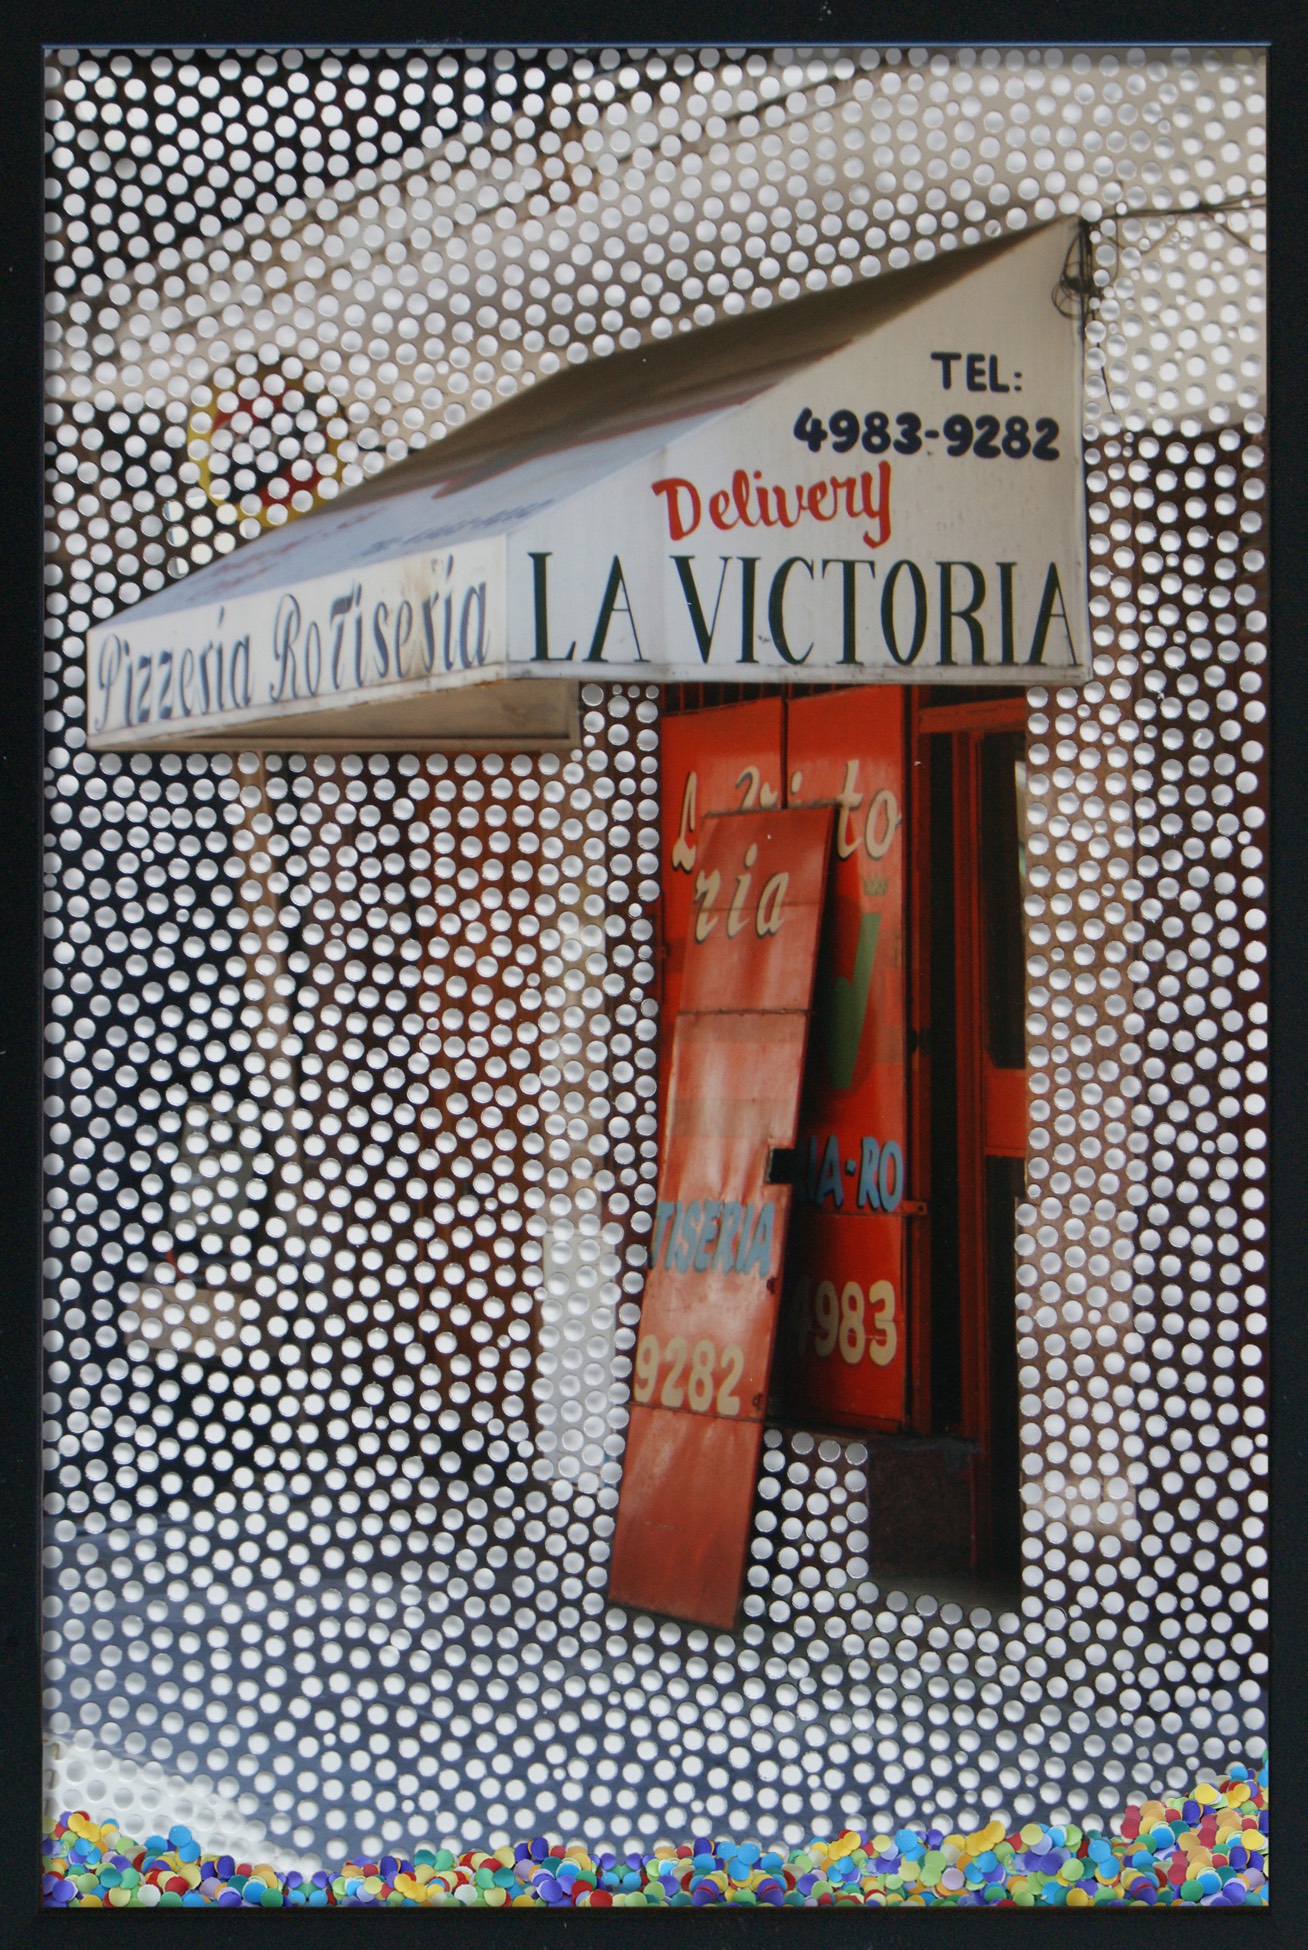 La Victoria (Delivery), 2012